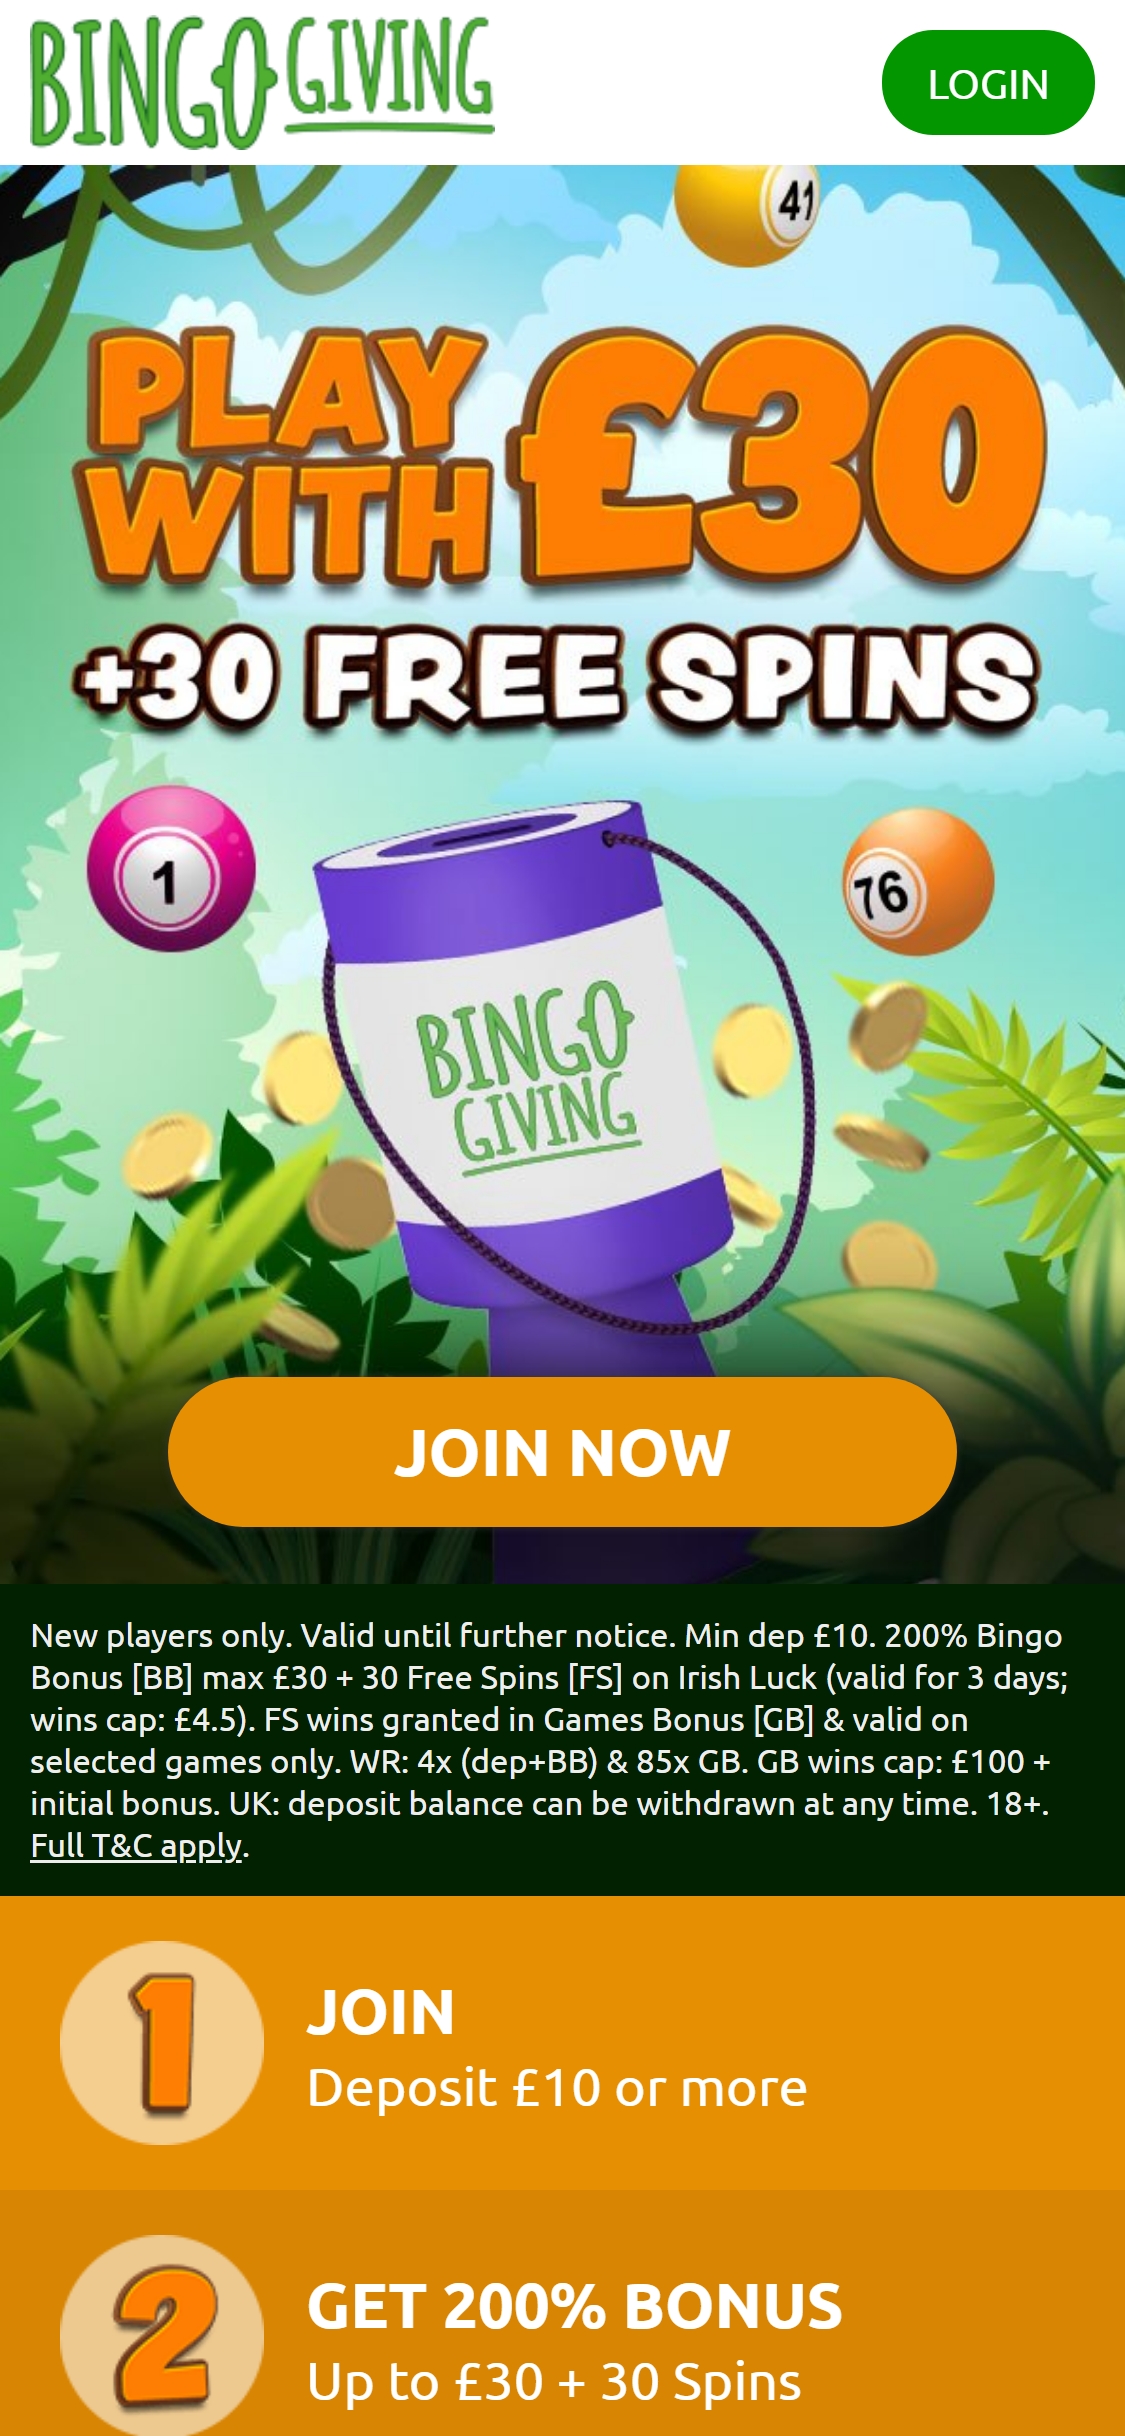 Bingo Giving Casino Mobile Review